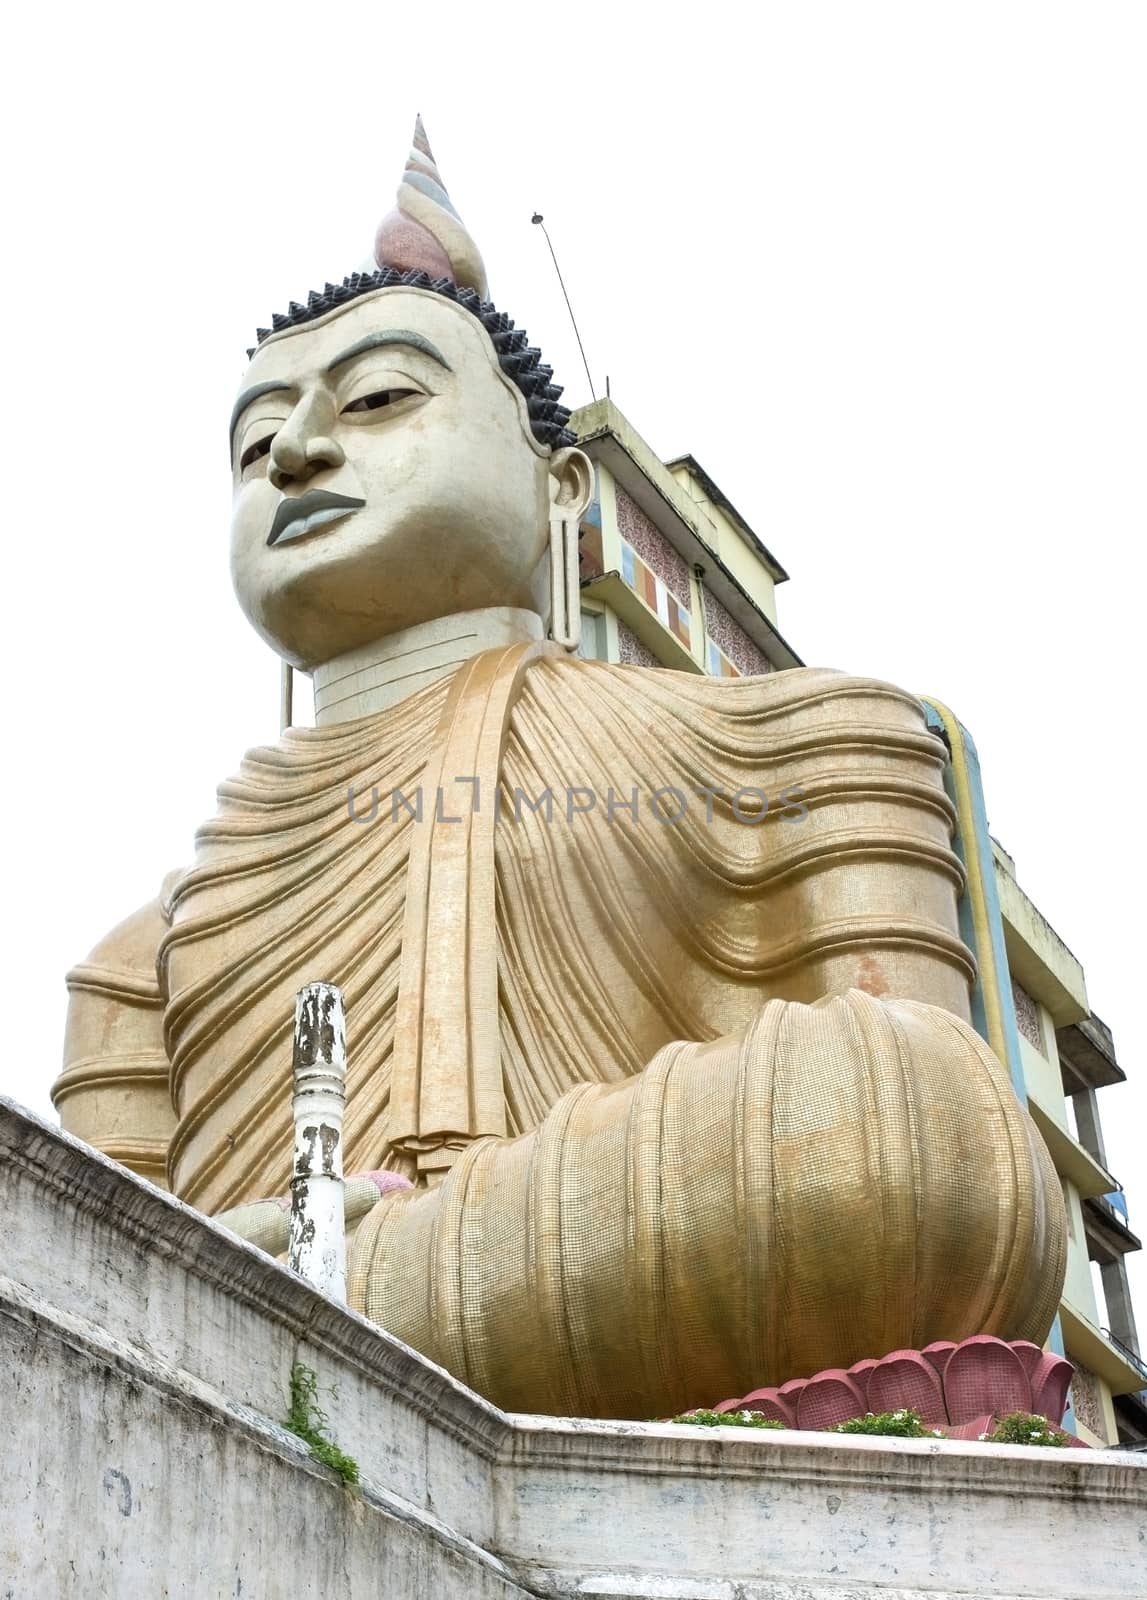 Sri Lanka's largest seated Buddha statue by ArtesiaWells